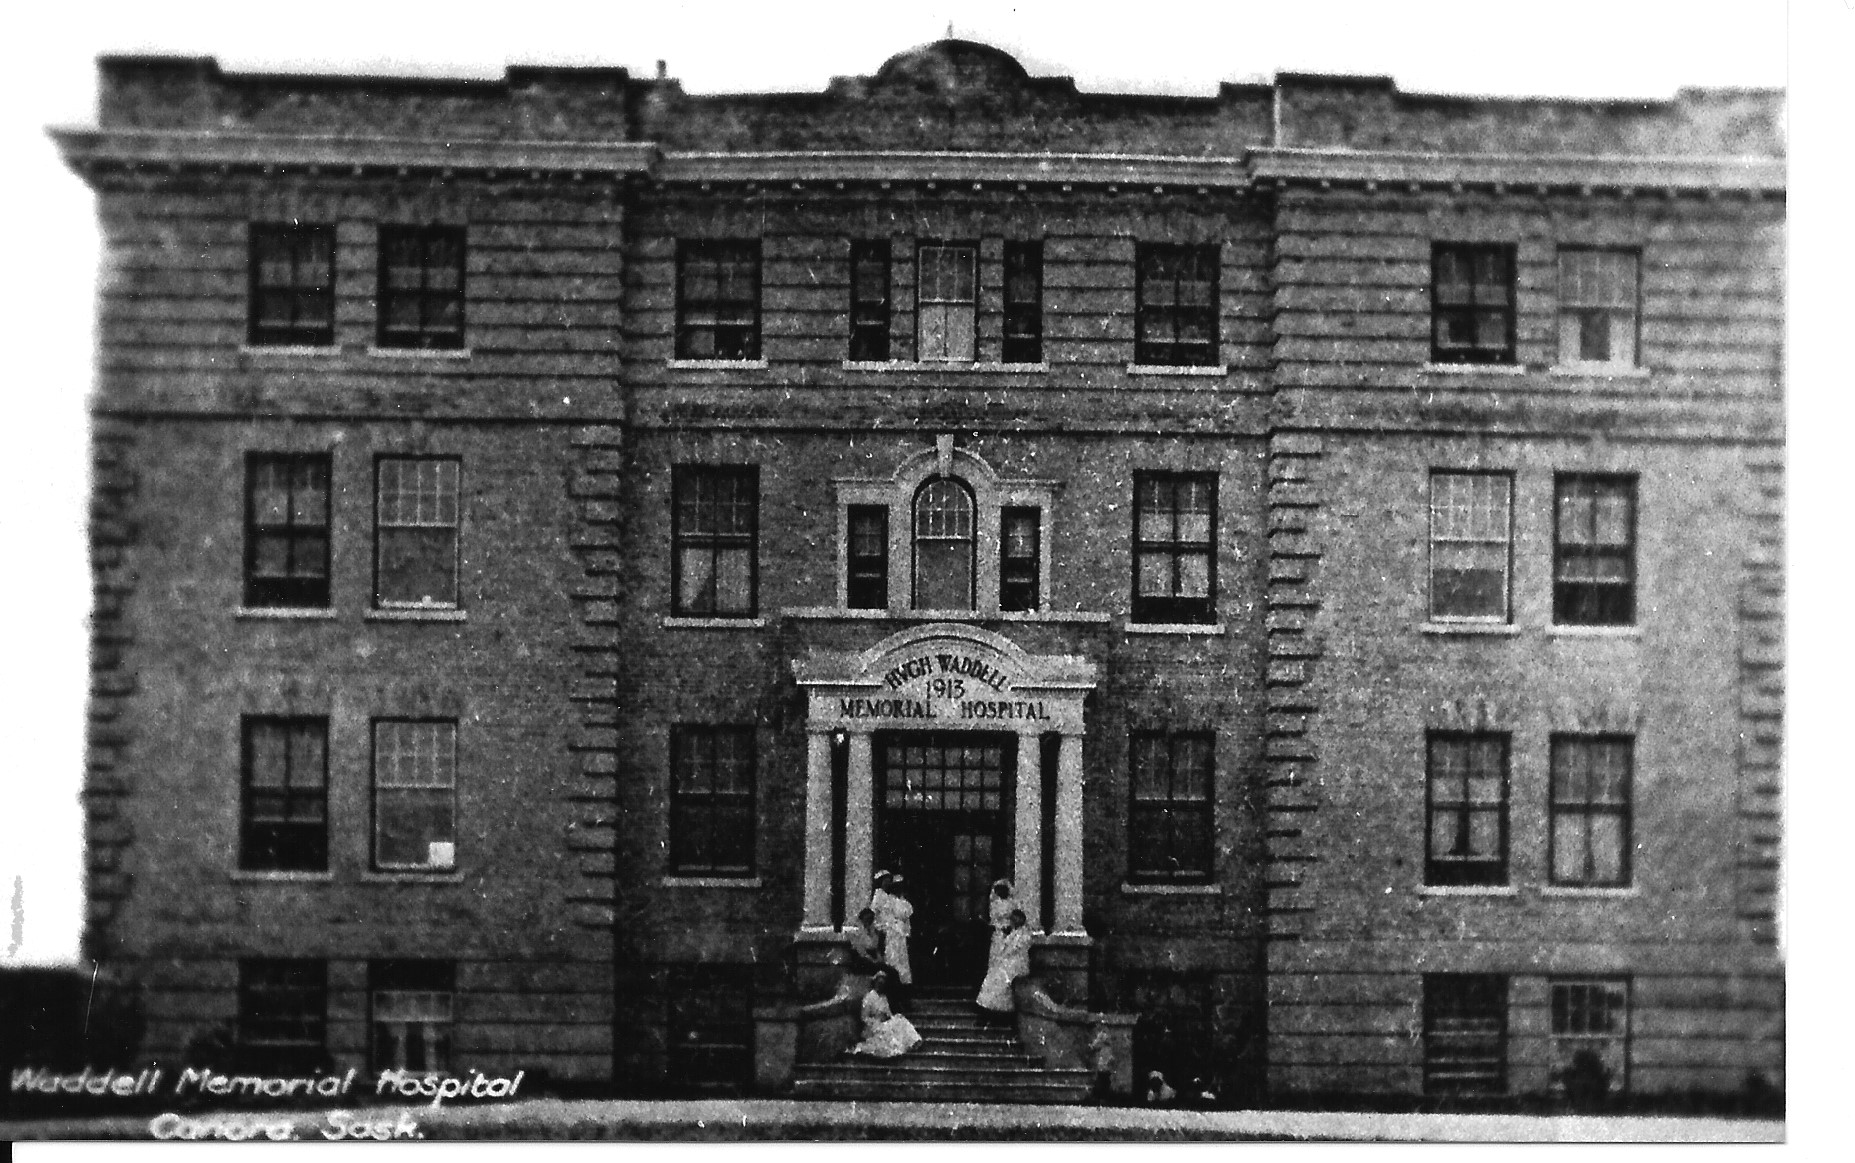 Historical PHOTO of Hugh Waddel Memorial Hospital in Canora Saskatchewan 